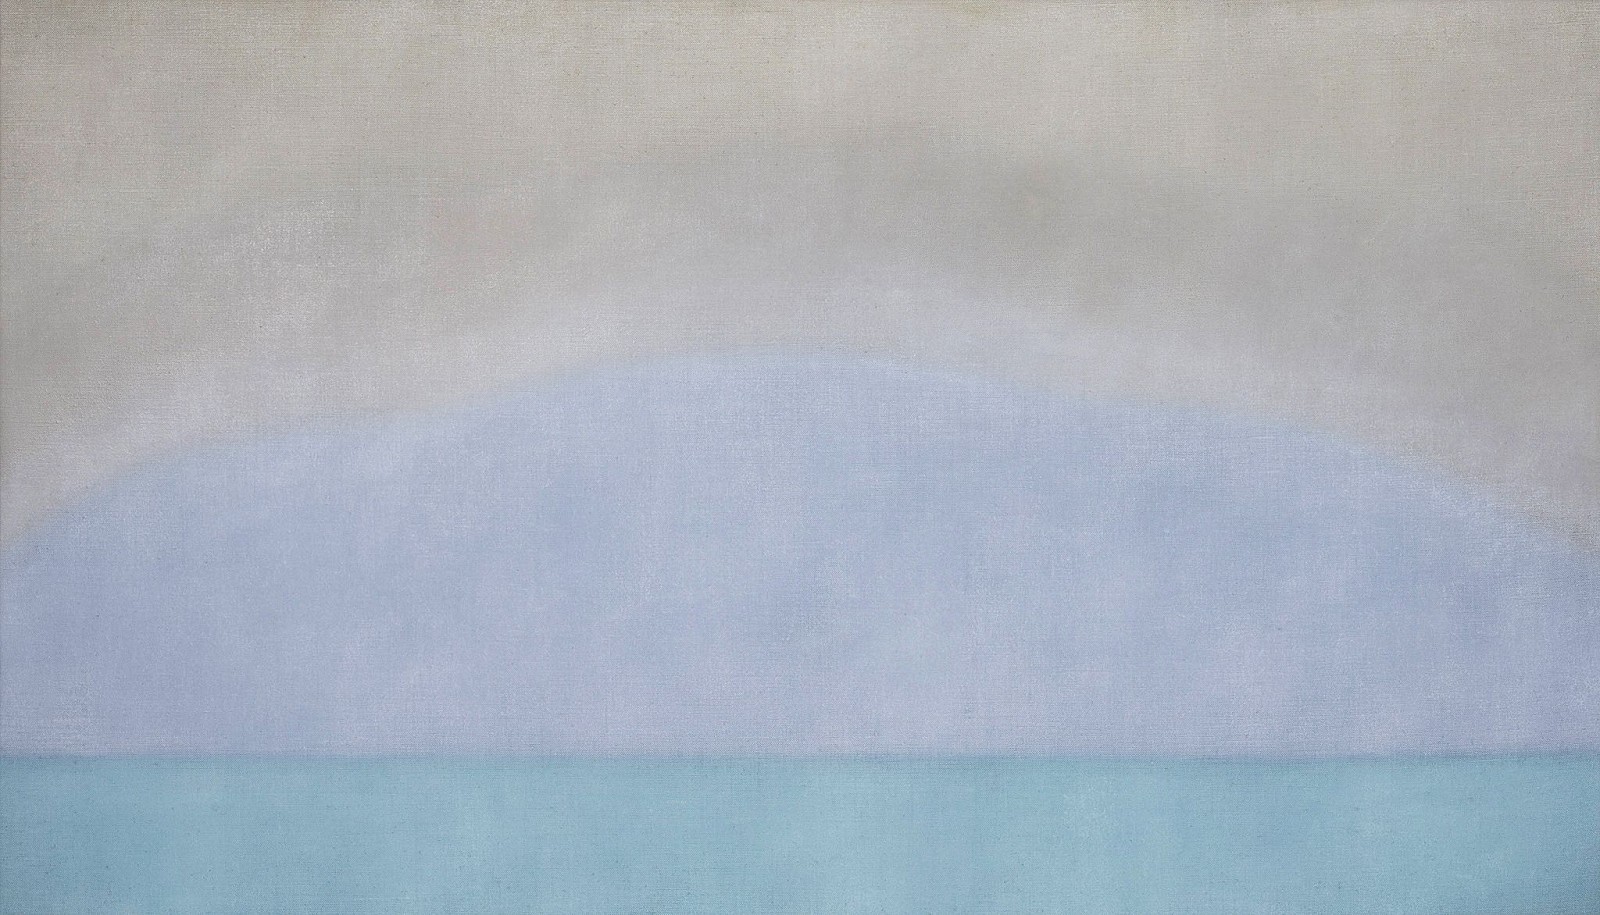 Susan Vecsey, Untitled (Aqua) | SOLD, 2020
Oil on linen, 40 x 70 in. (101.6 x 177.8 cm)
VEC-00208